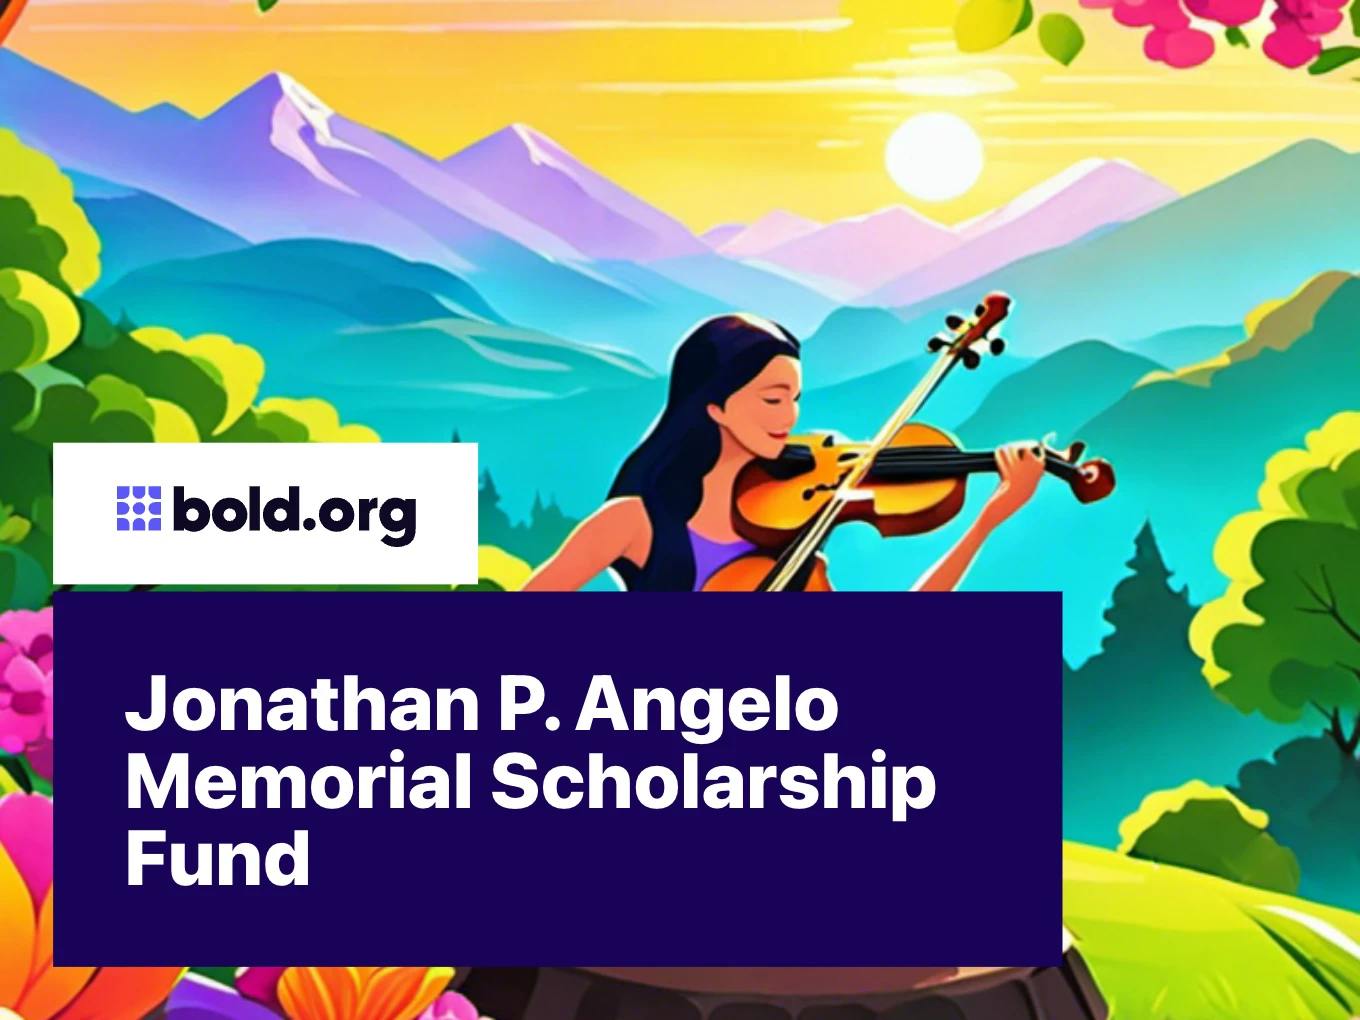 Jonathan P. Angelo Memorial Scholarship Fund